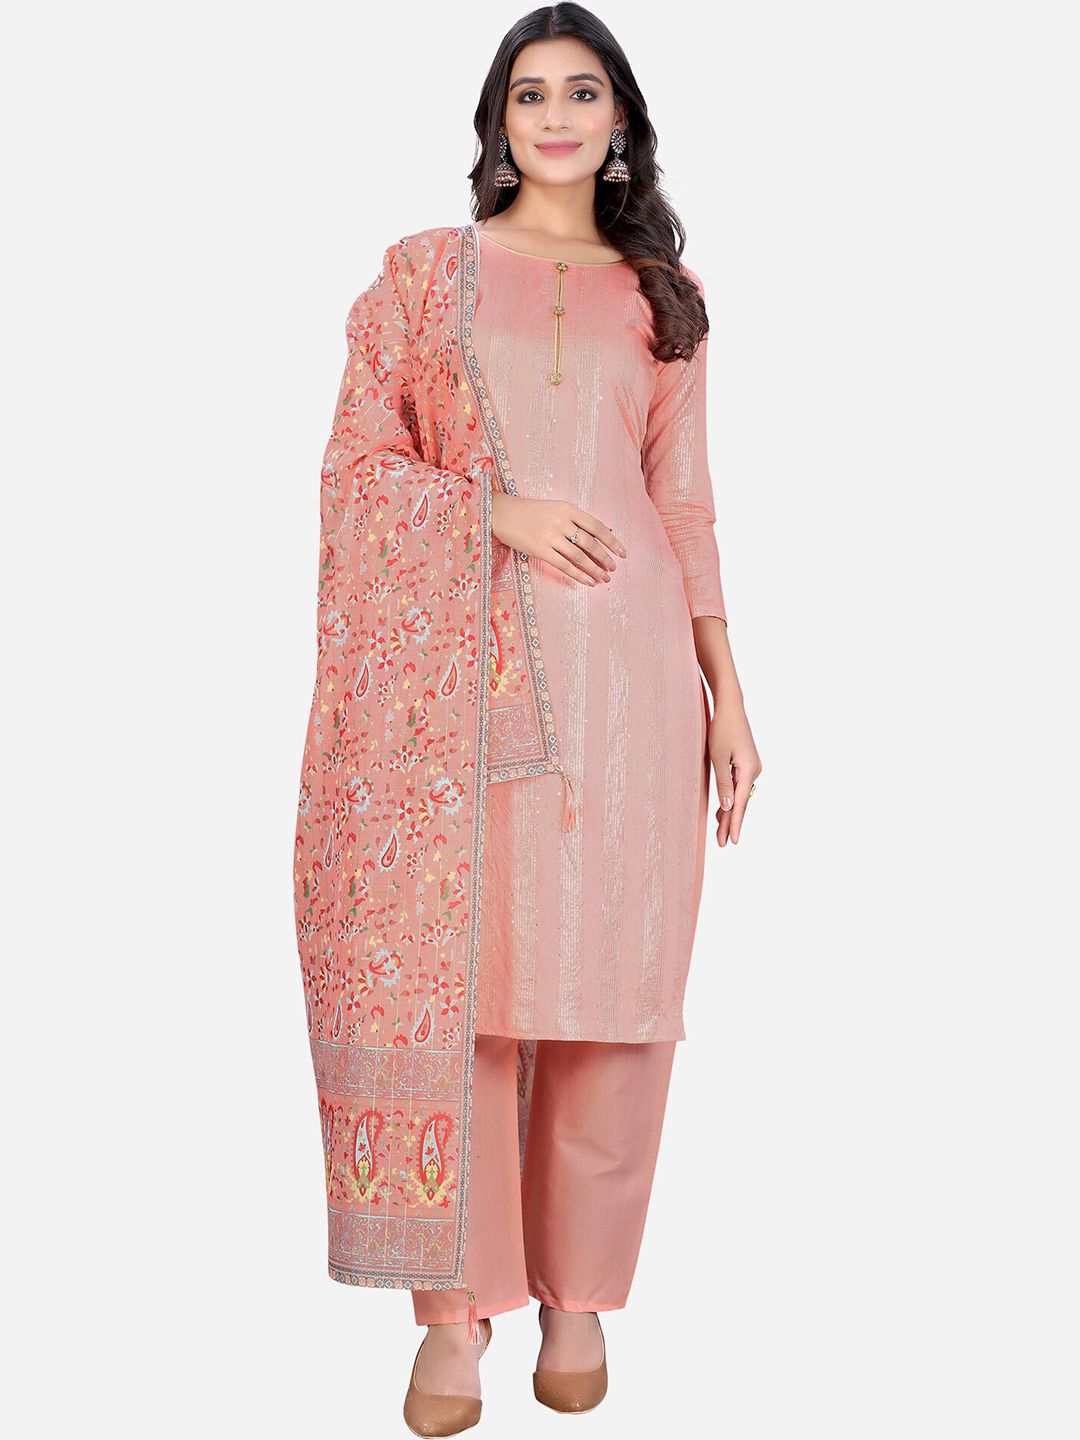 Satrani Peach-Coloured & White Printed Unstitched Dress Material Price in India